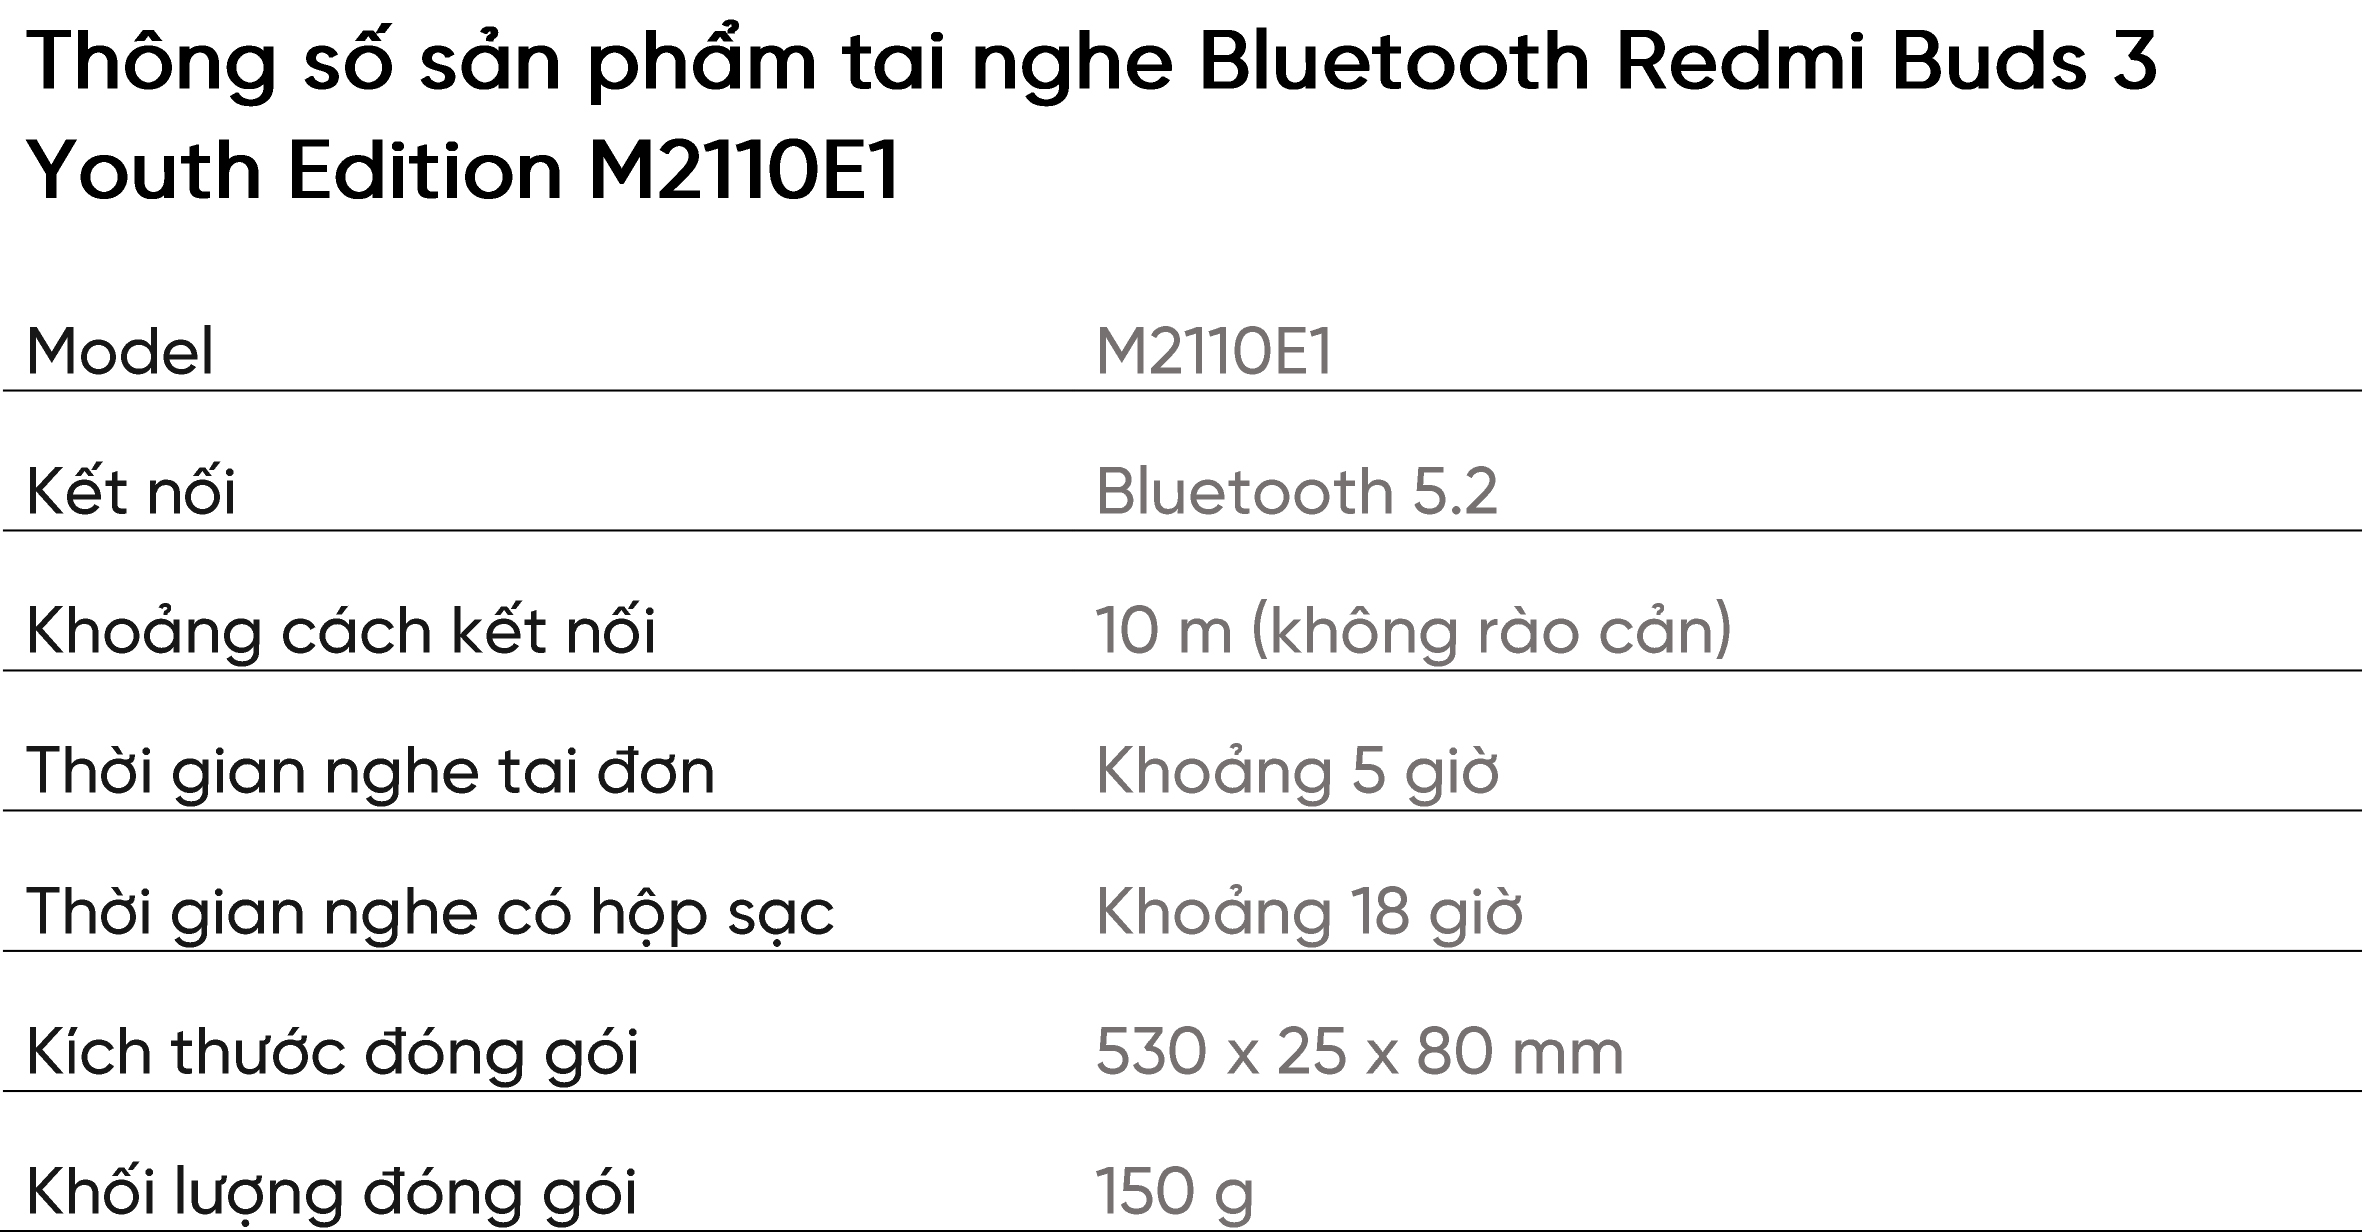 Tai nghe Bluetooth Redmi Buds 3 Youth Edition M2110E1